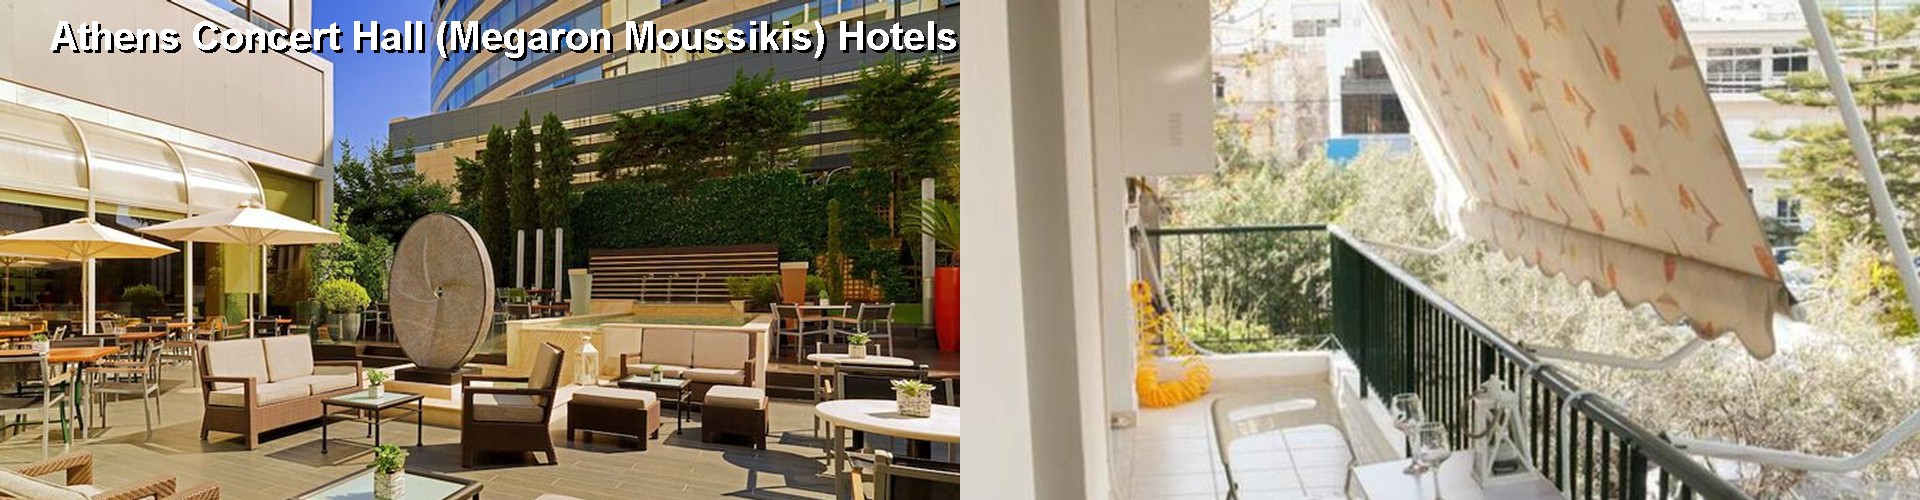 5 Best Hotels near Athens Concert Hall (Megaron Moussikis)